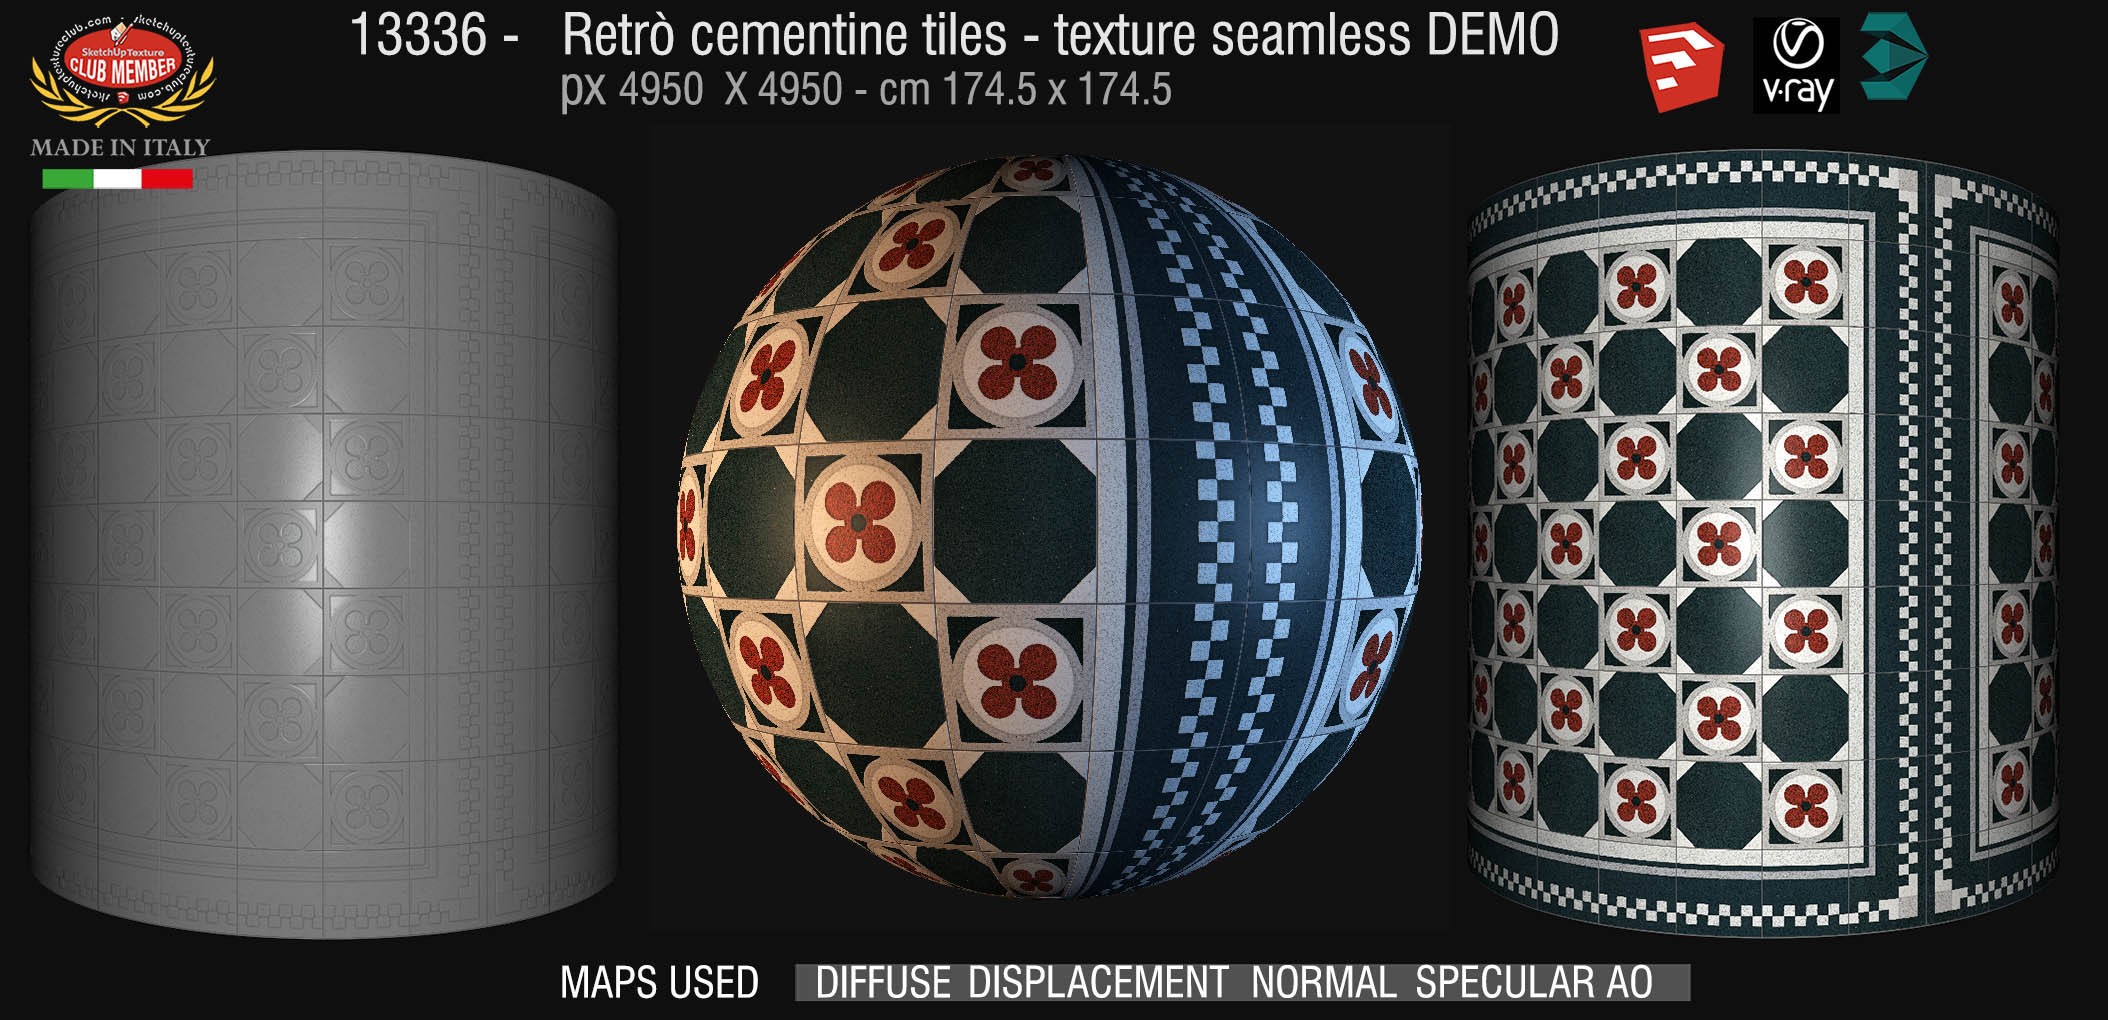 13336 retrò cementine tiles - texture seamless + maps DEMO